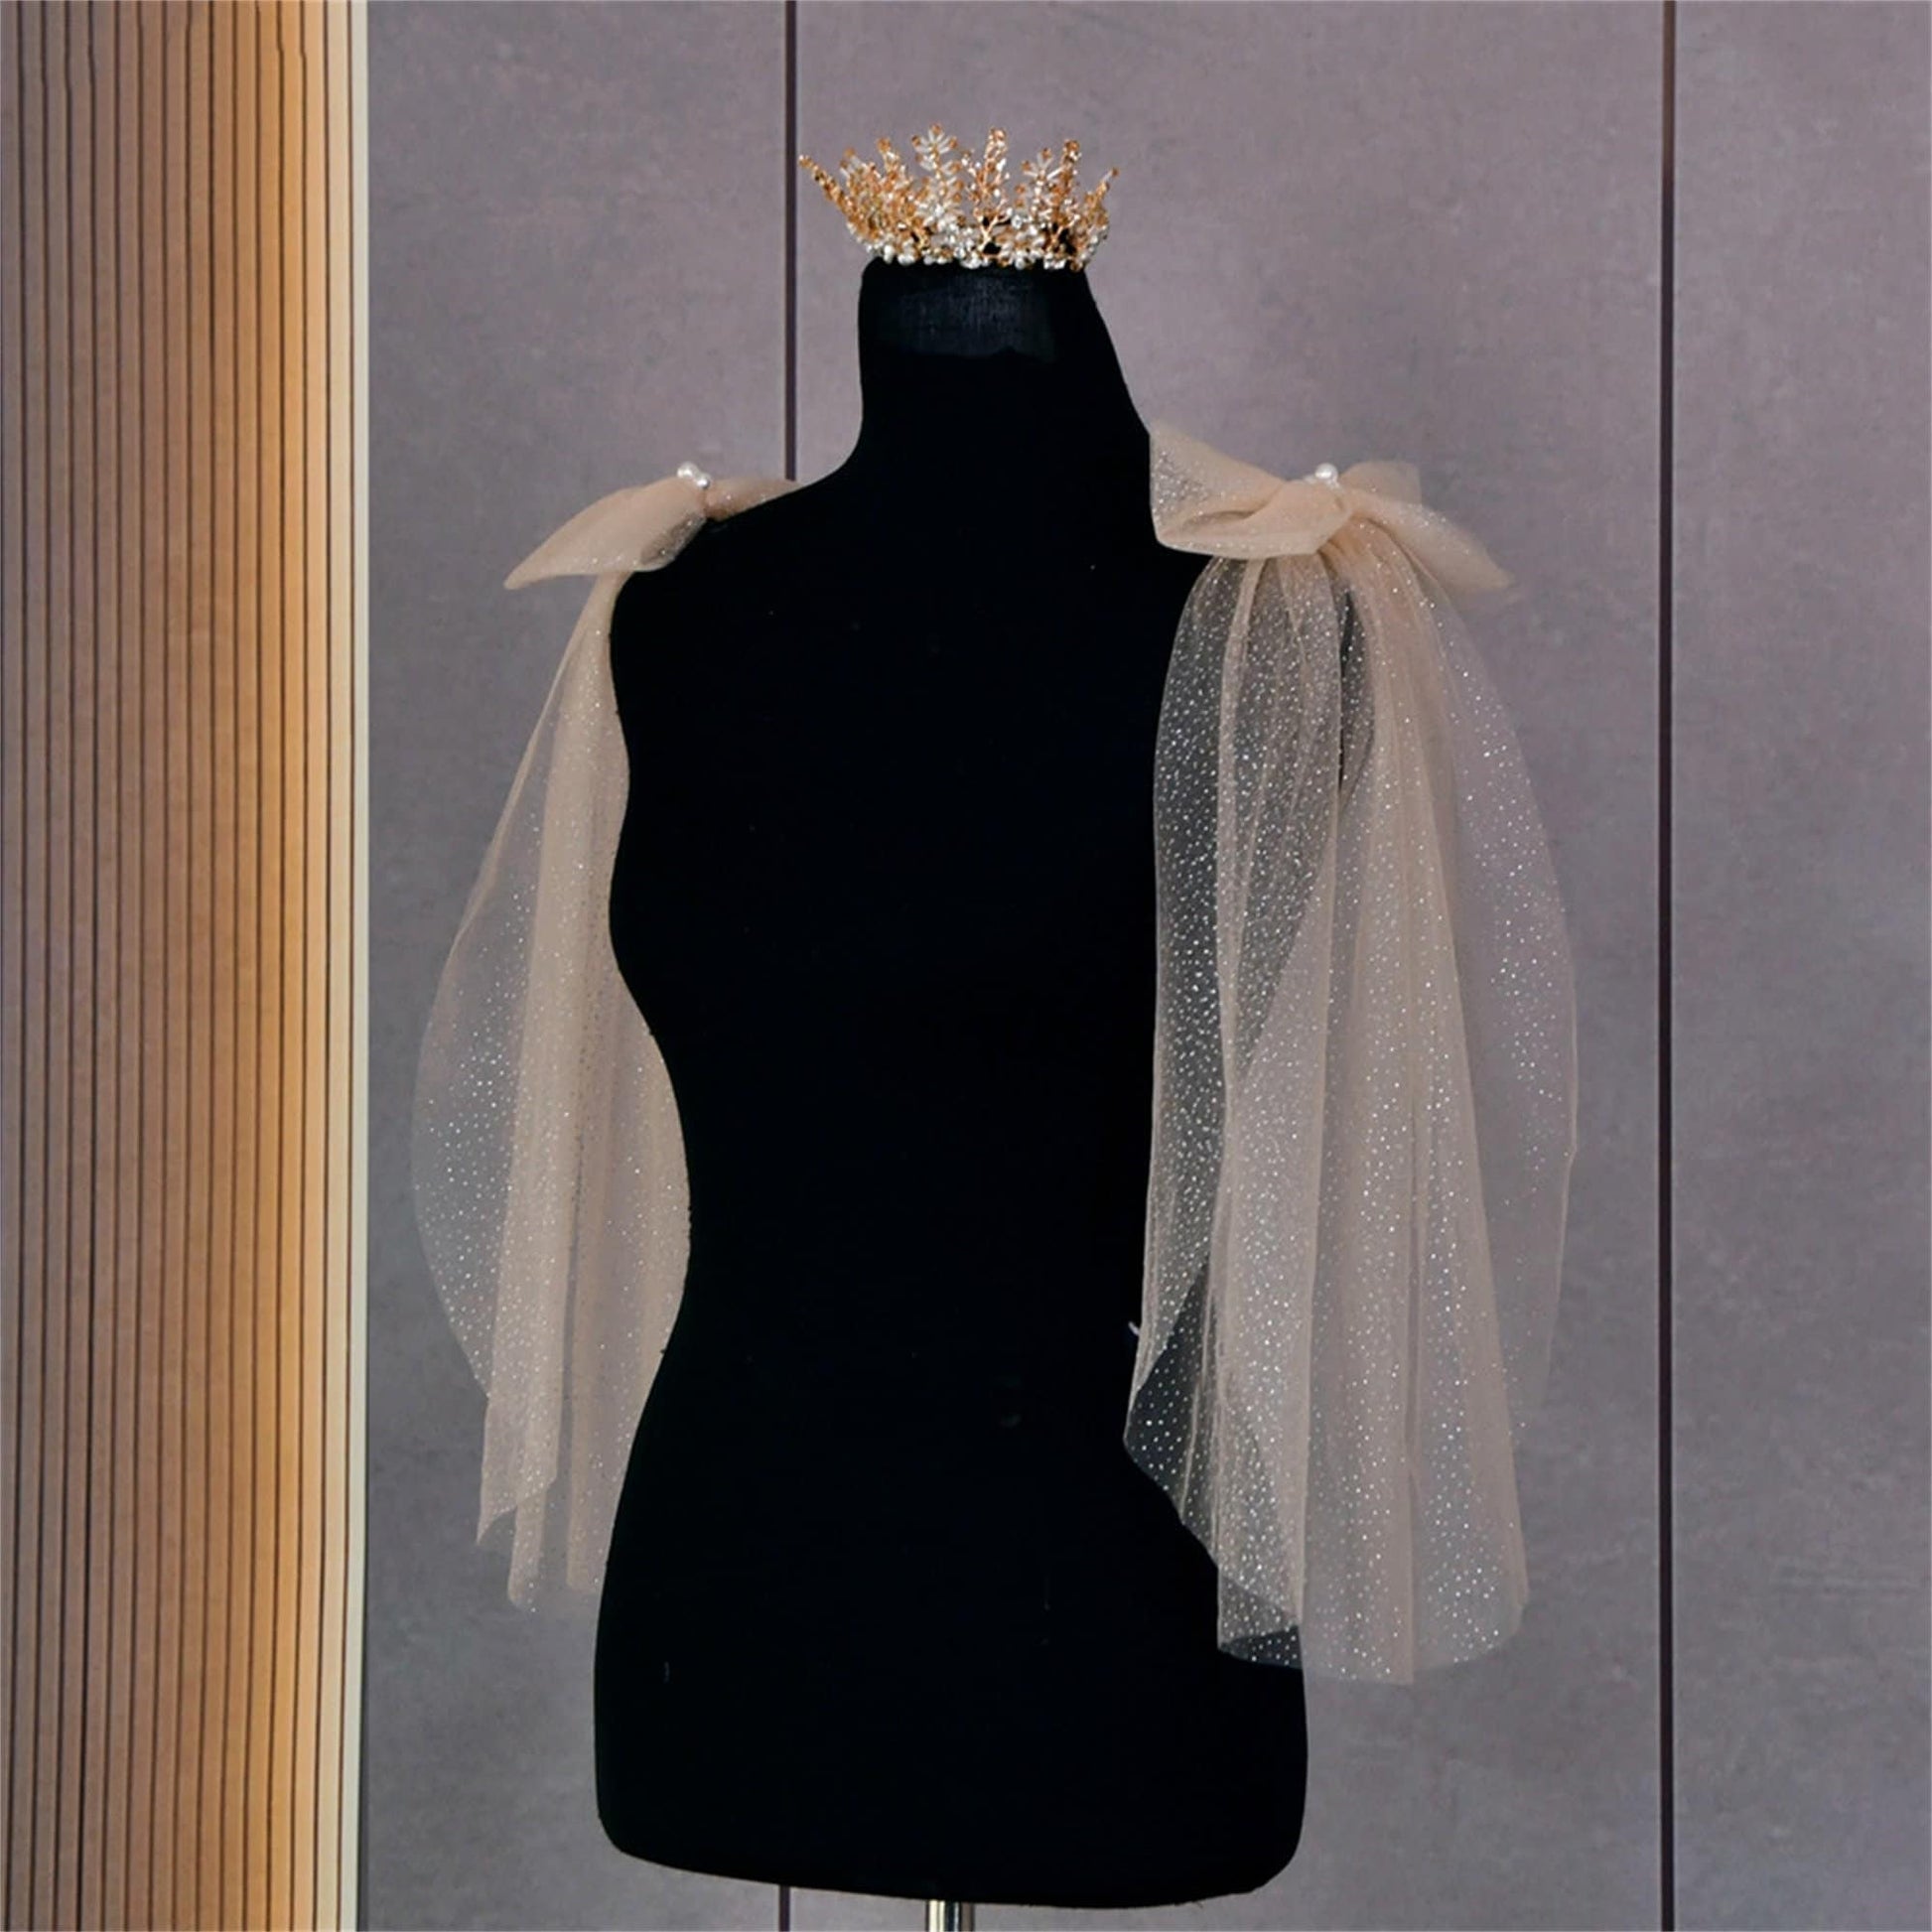 Sparking Bridal Wings Veil with Bow - Wedding Bridal Veil